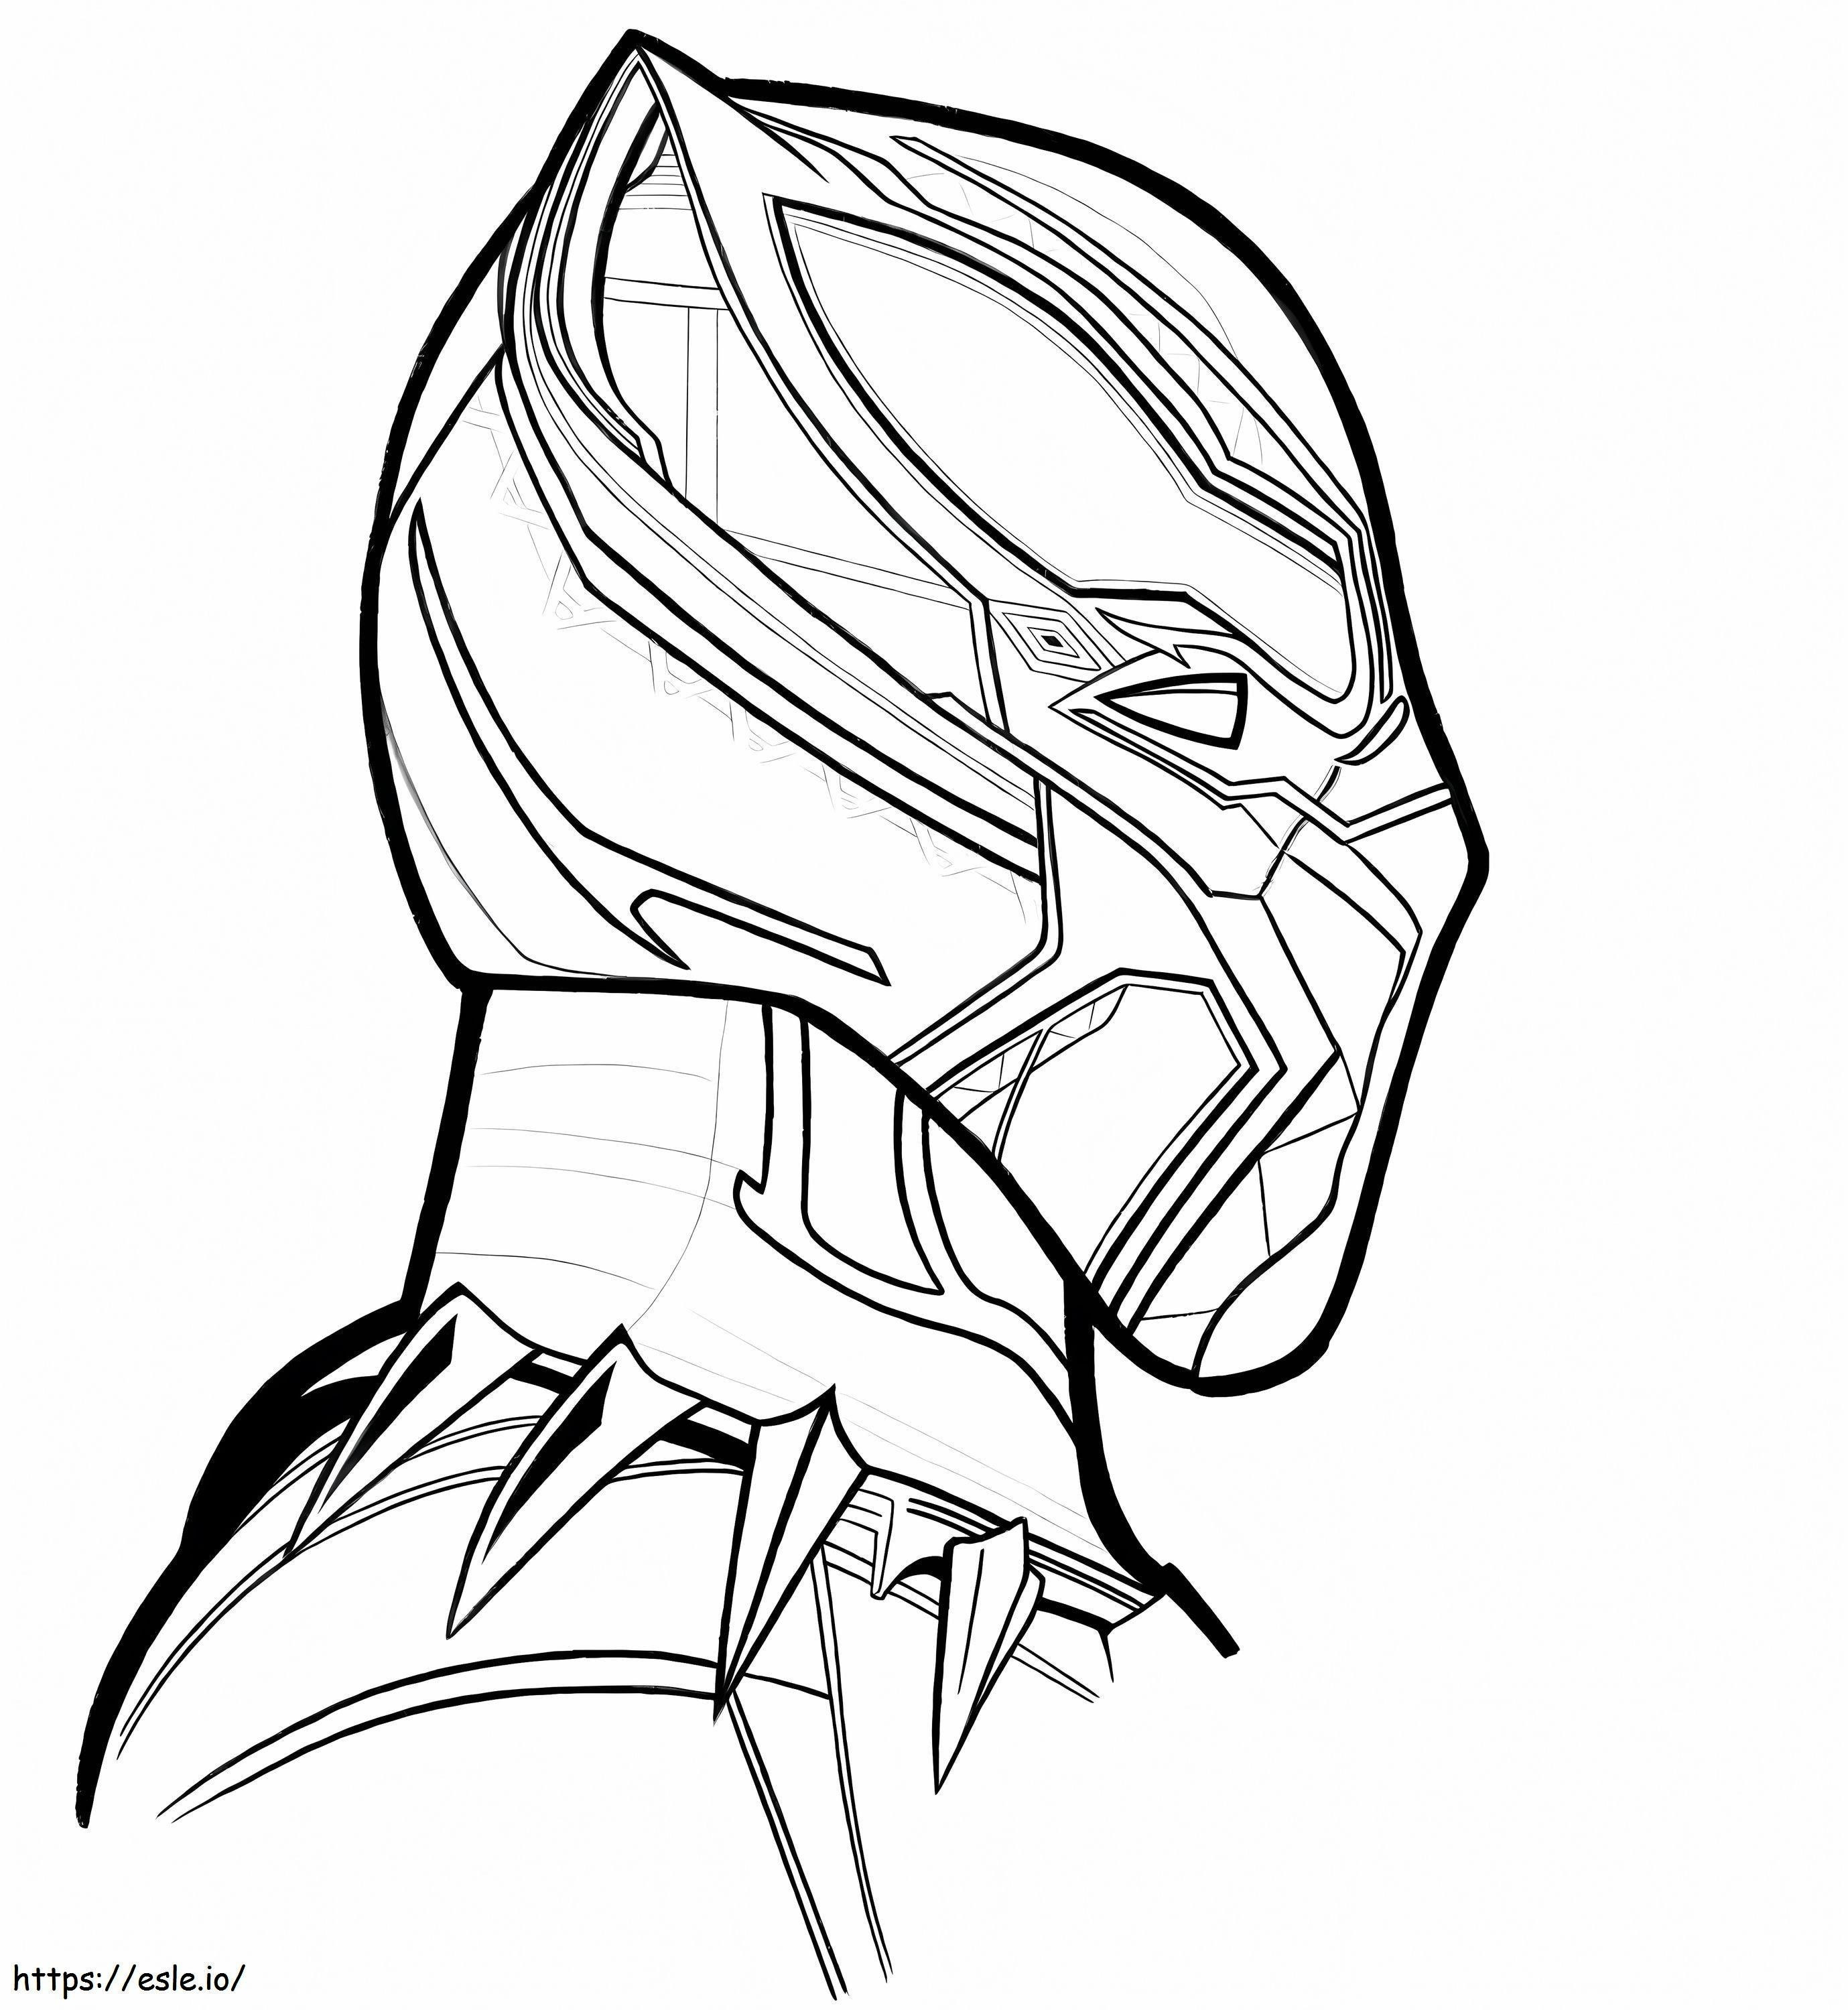 Tolle Black-Panther-Maske ausmalbilder